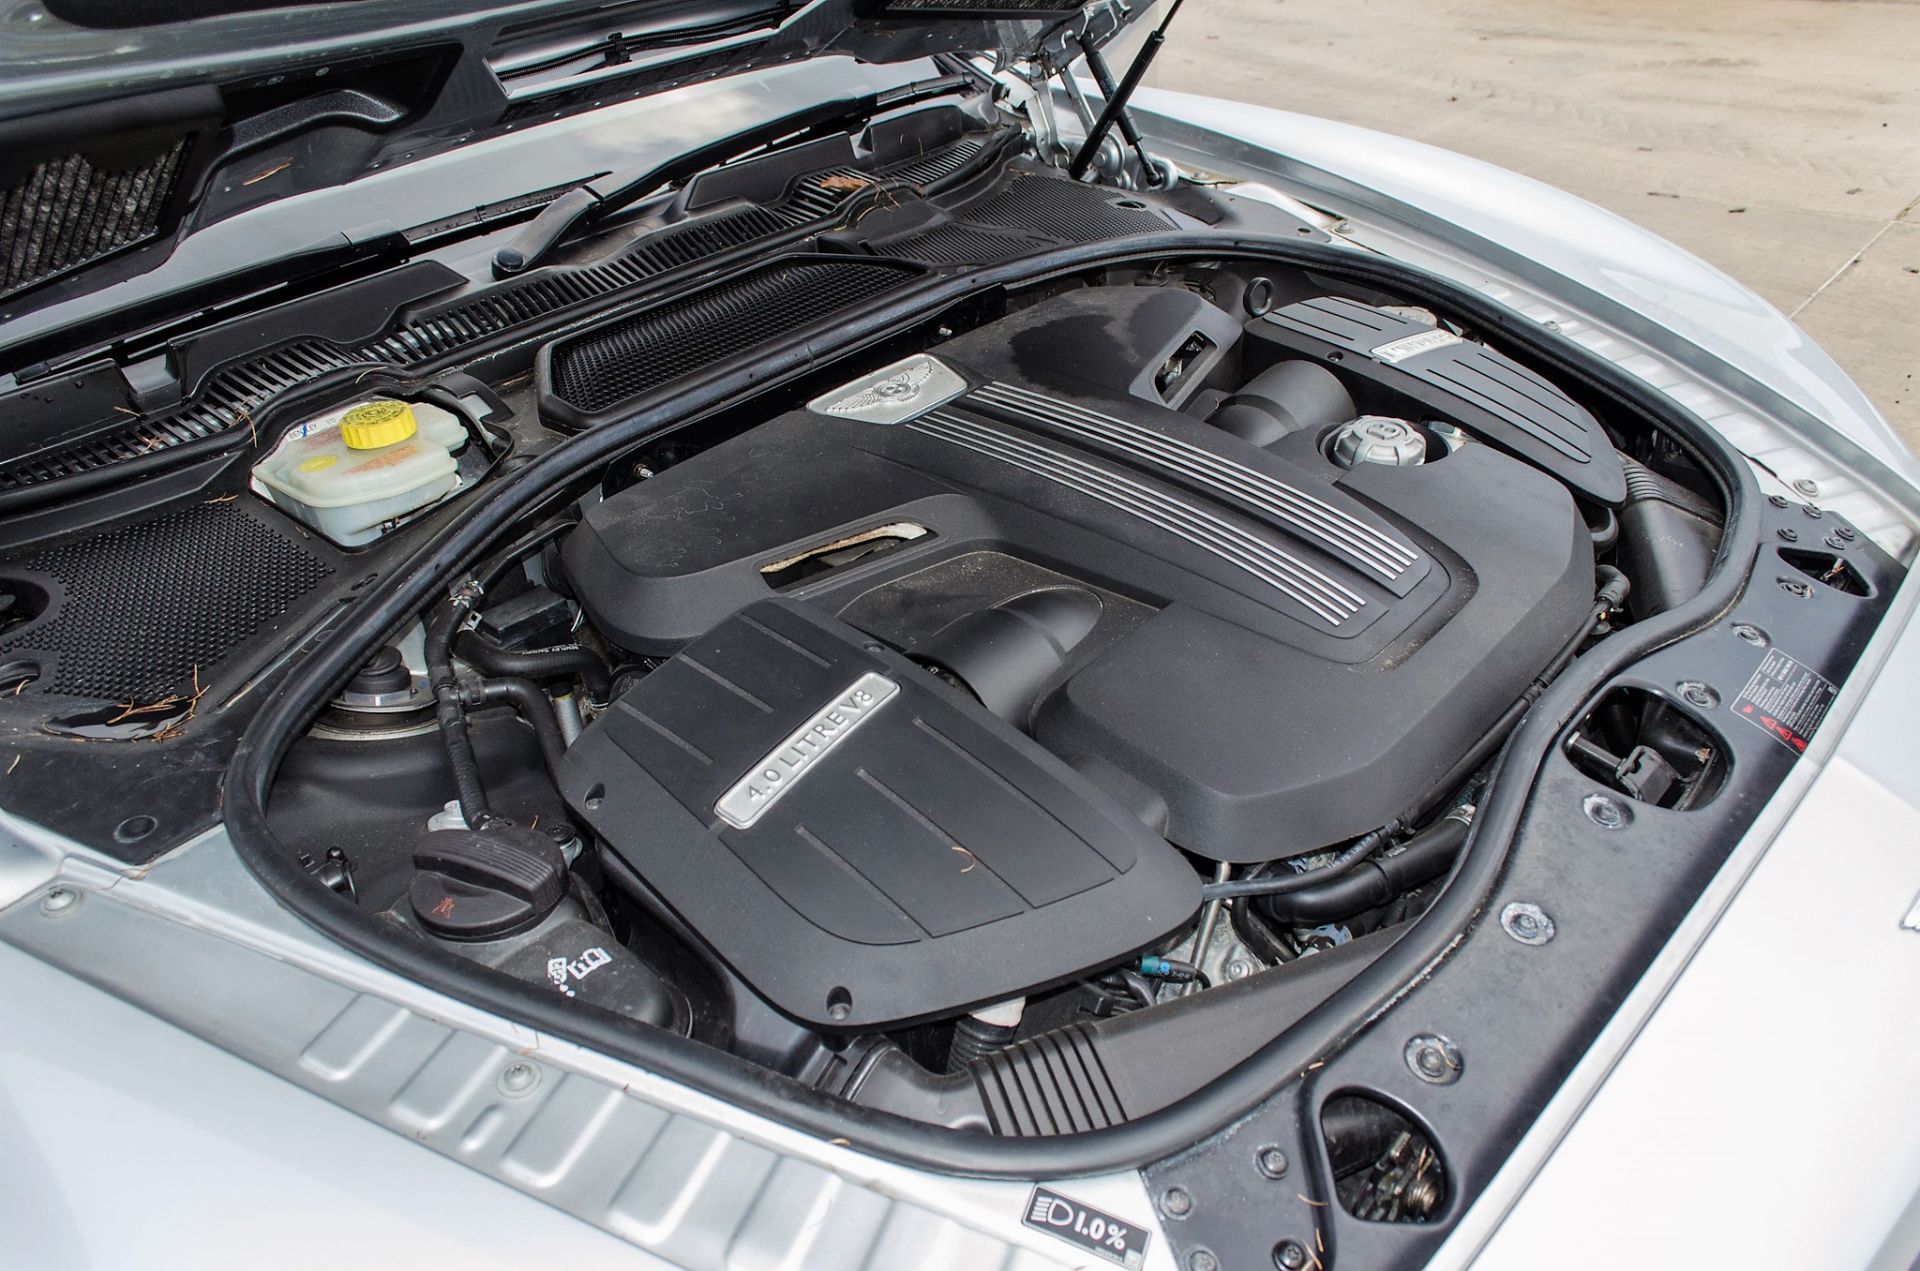 Bentley Continental GTC 4.0 V8 2 door convertible Reg No: RCS 88 (reg number will be retained) - Image 50 of 51